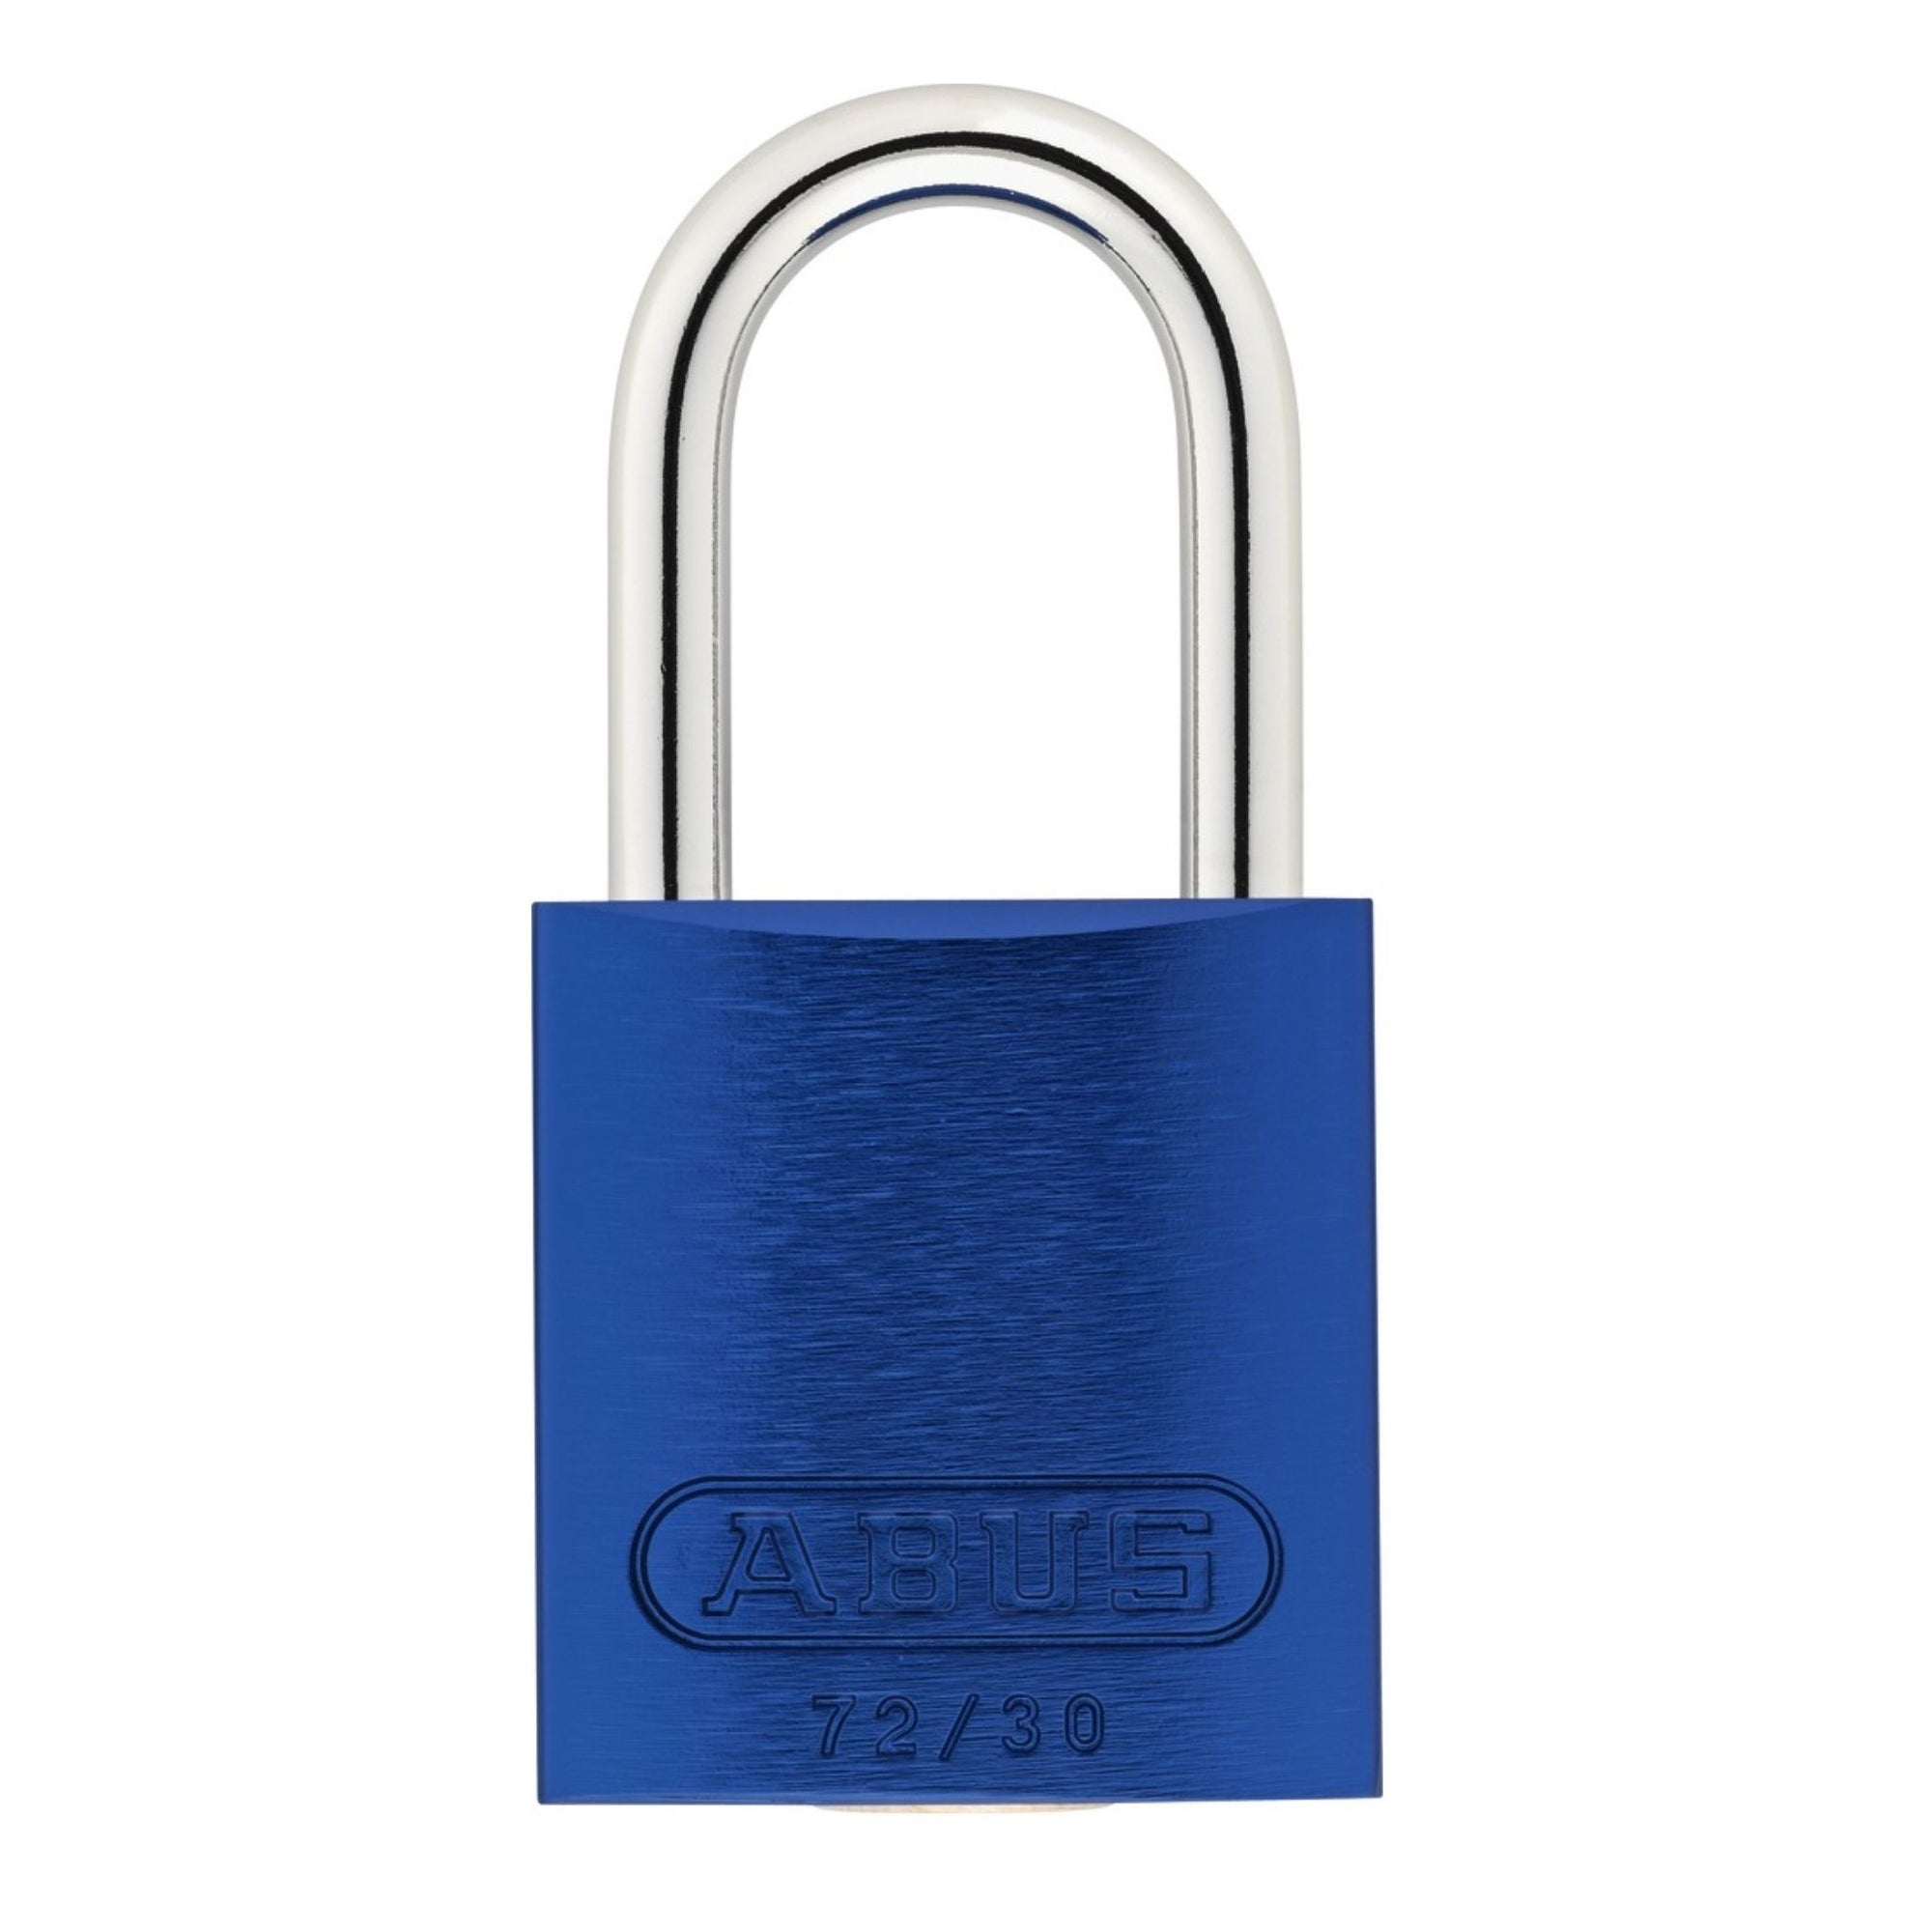 Abus 72/30 KD Blue Aluminum Safety Padlock - The Lock Source